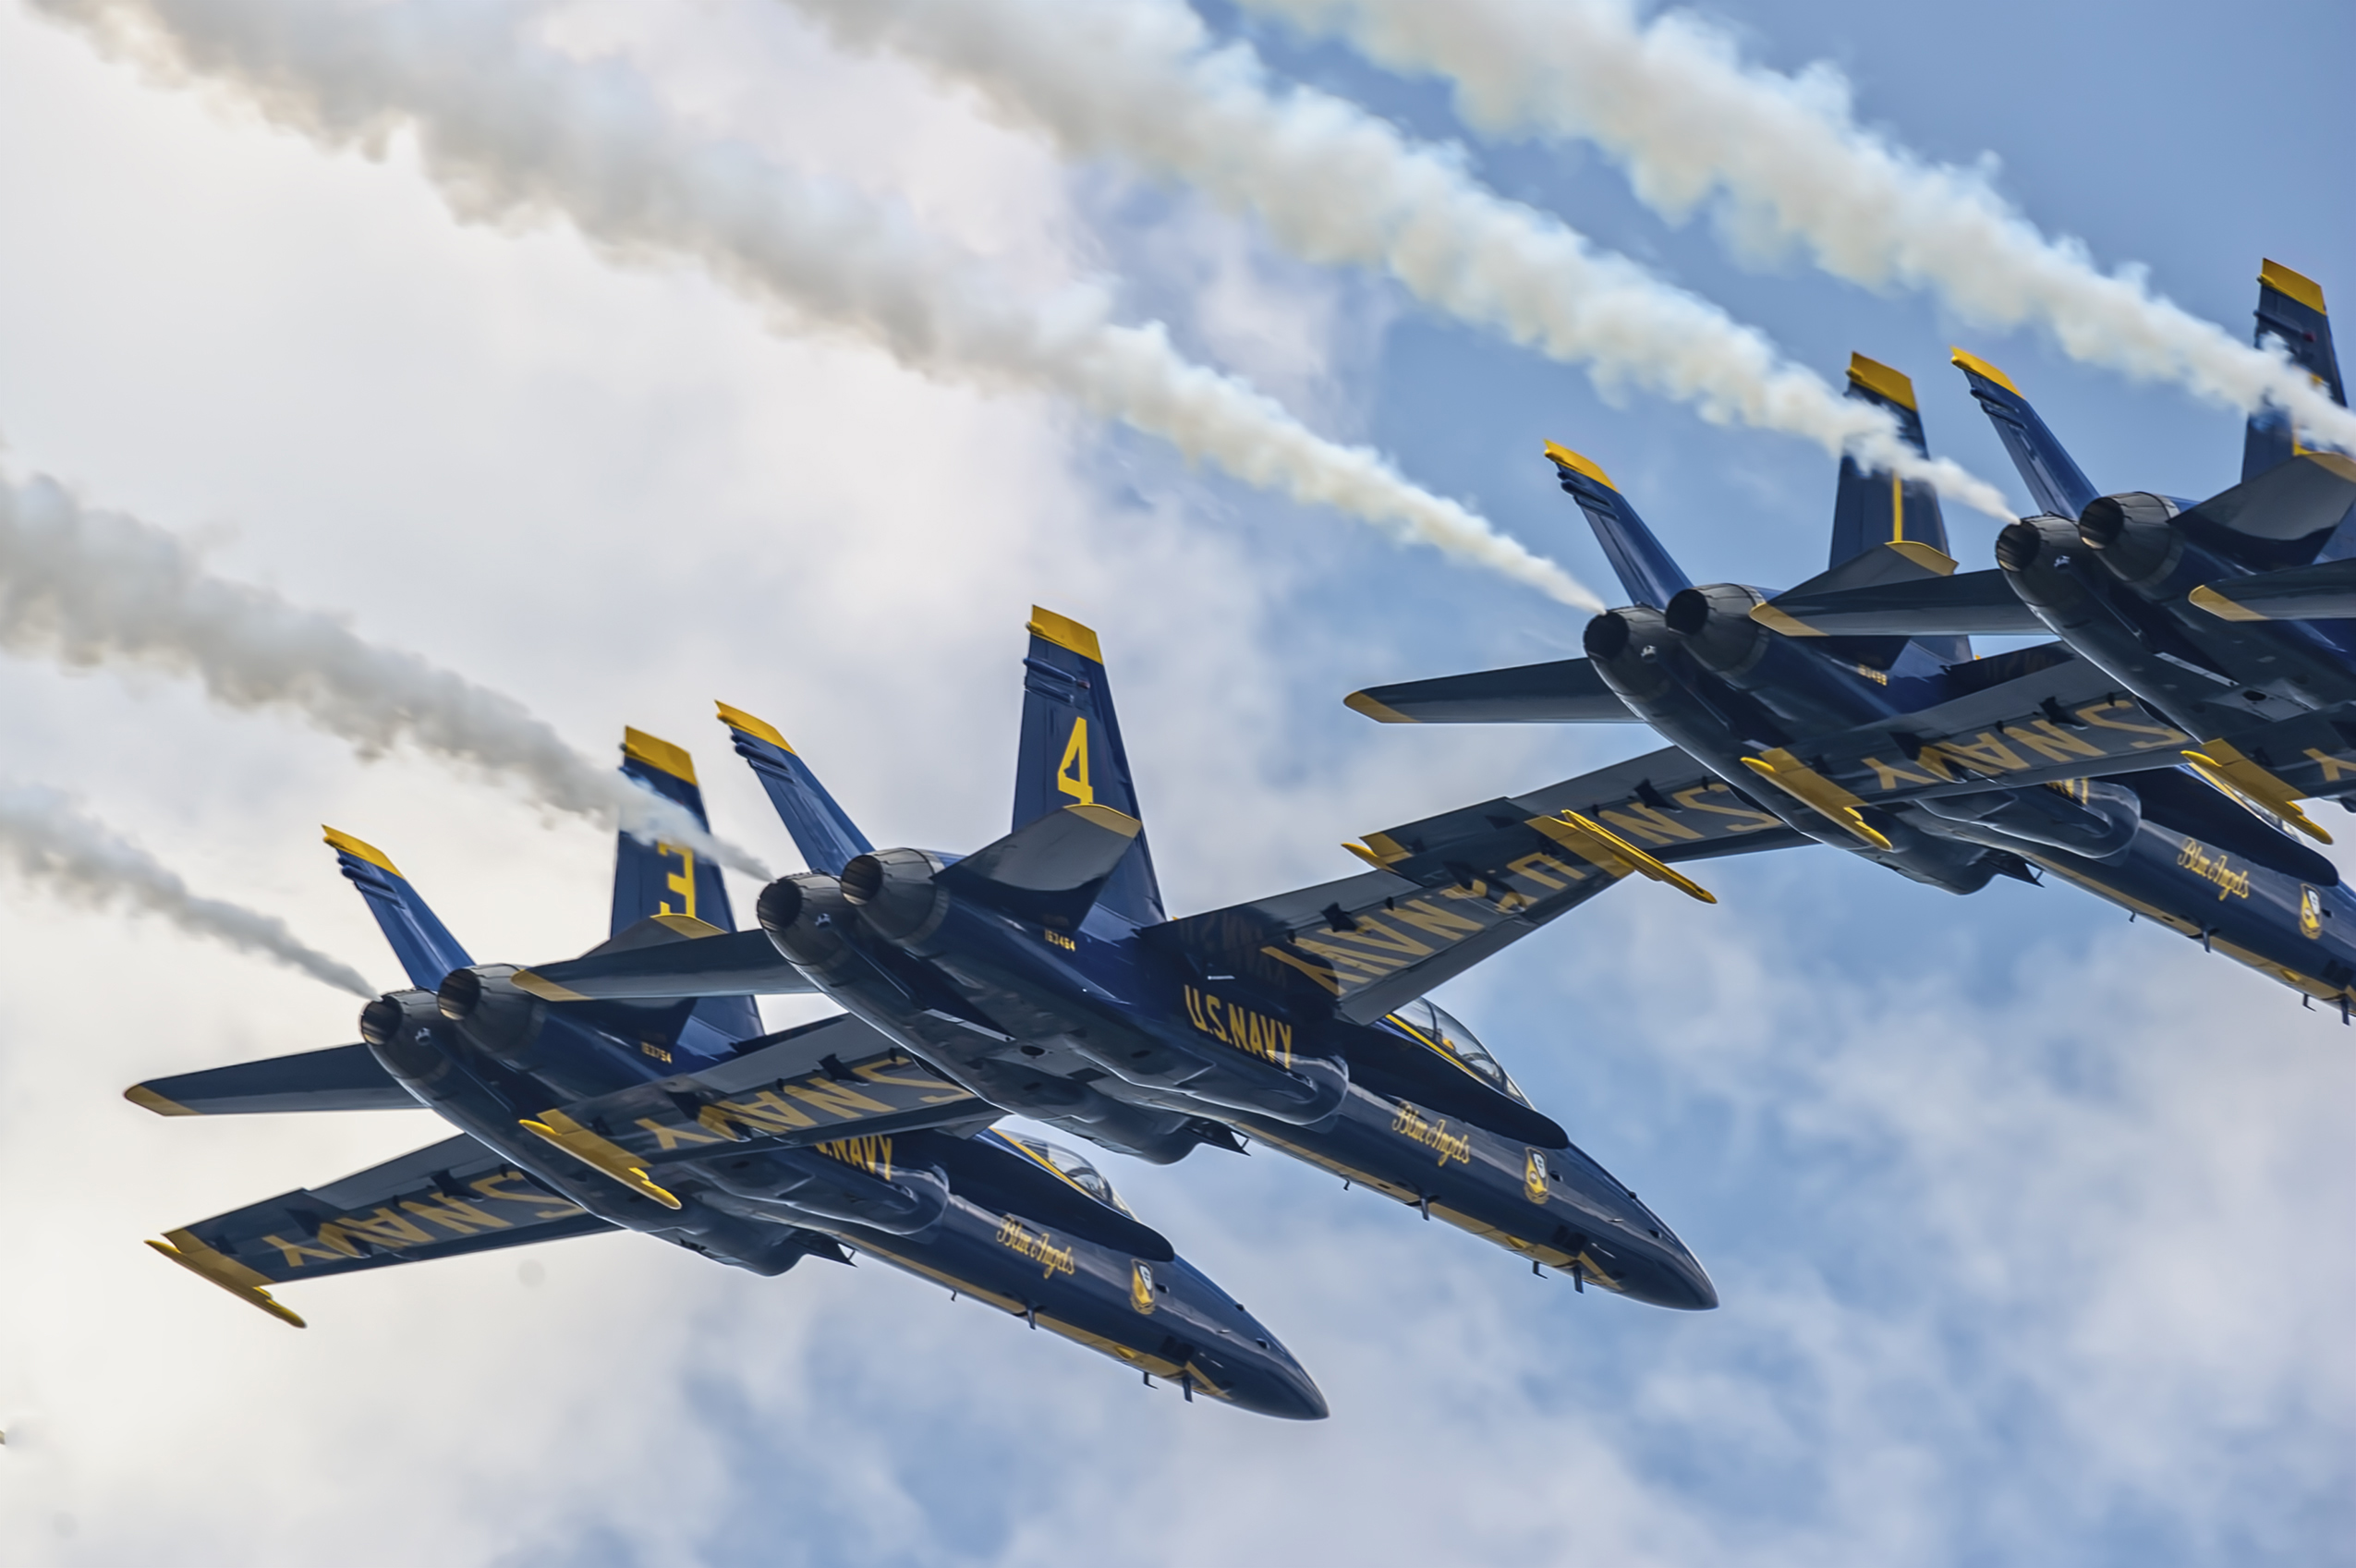 The U.S. Navy’s Blue Angel jets